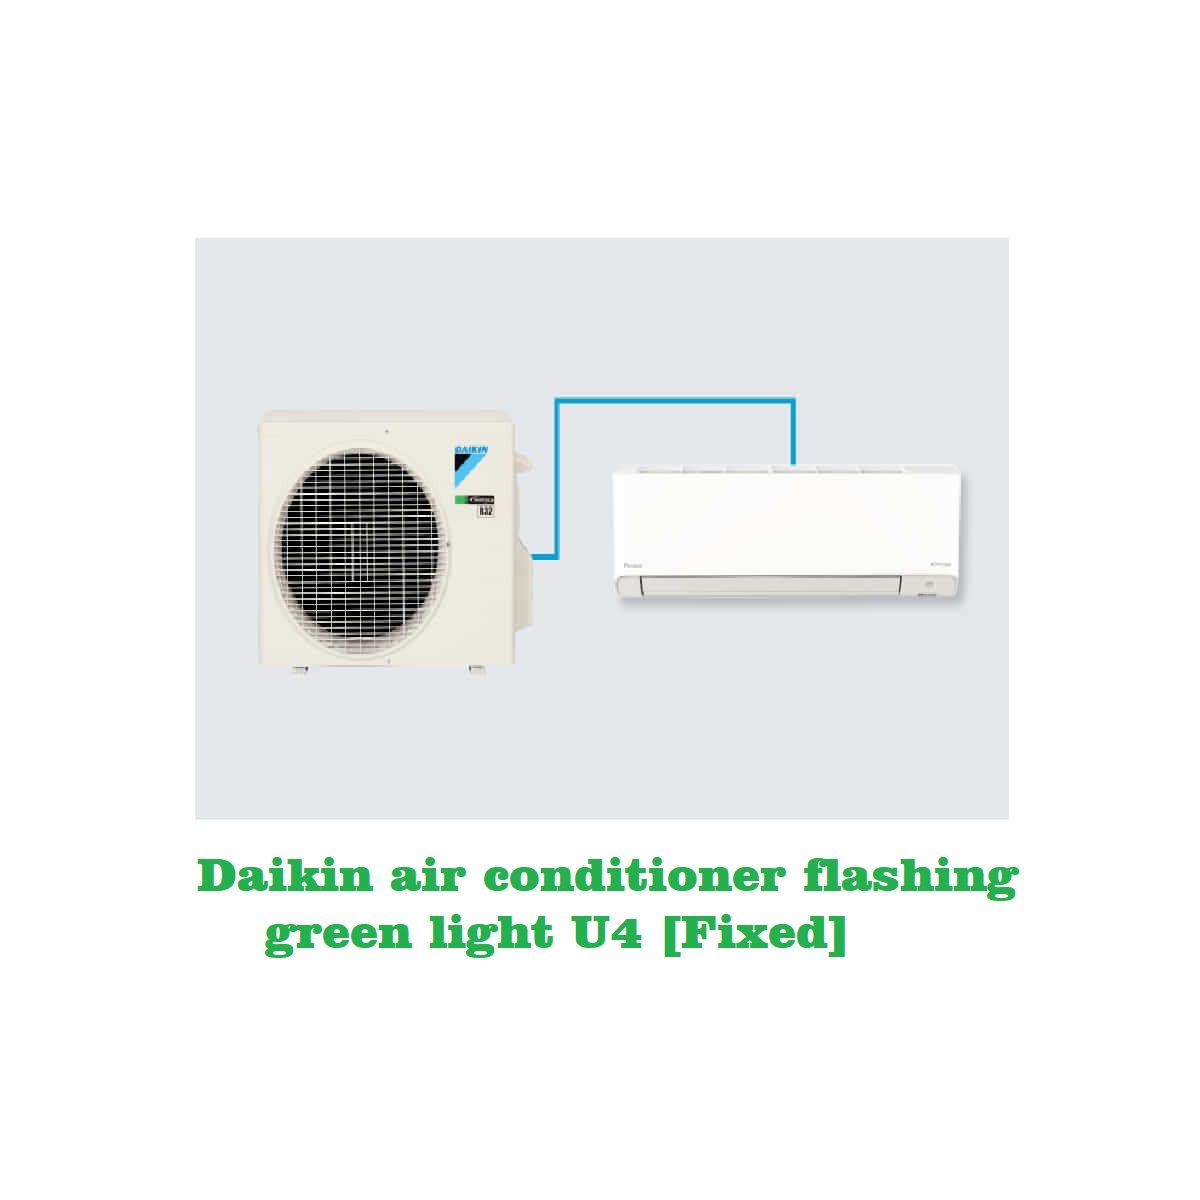 Daikin air conditioner flashing green light U4